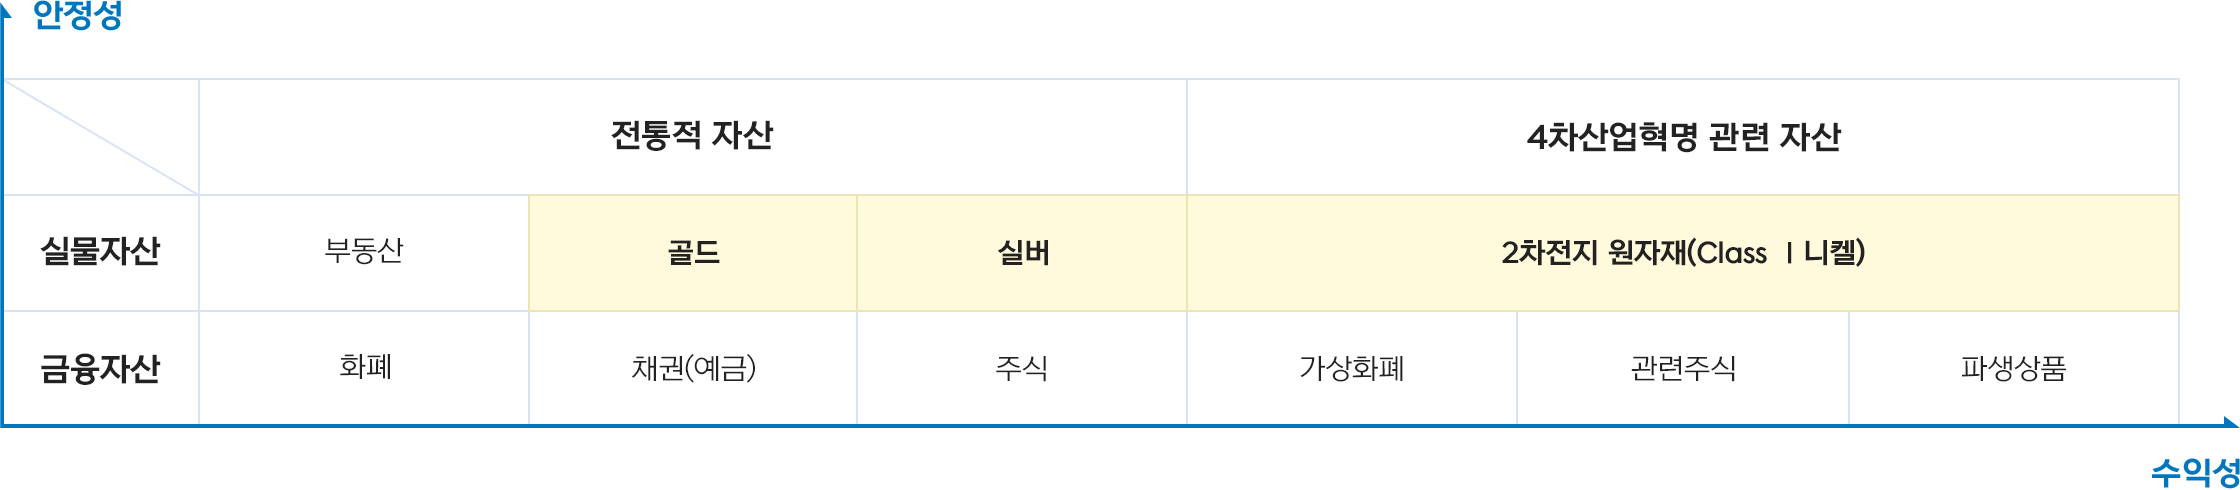 SGDV Korea 상품 안전성,수익성 그래프